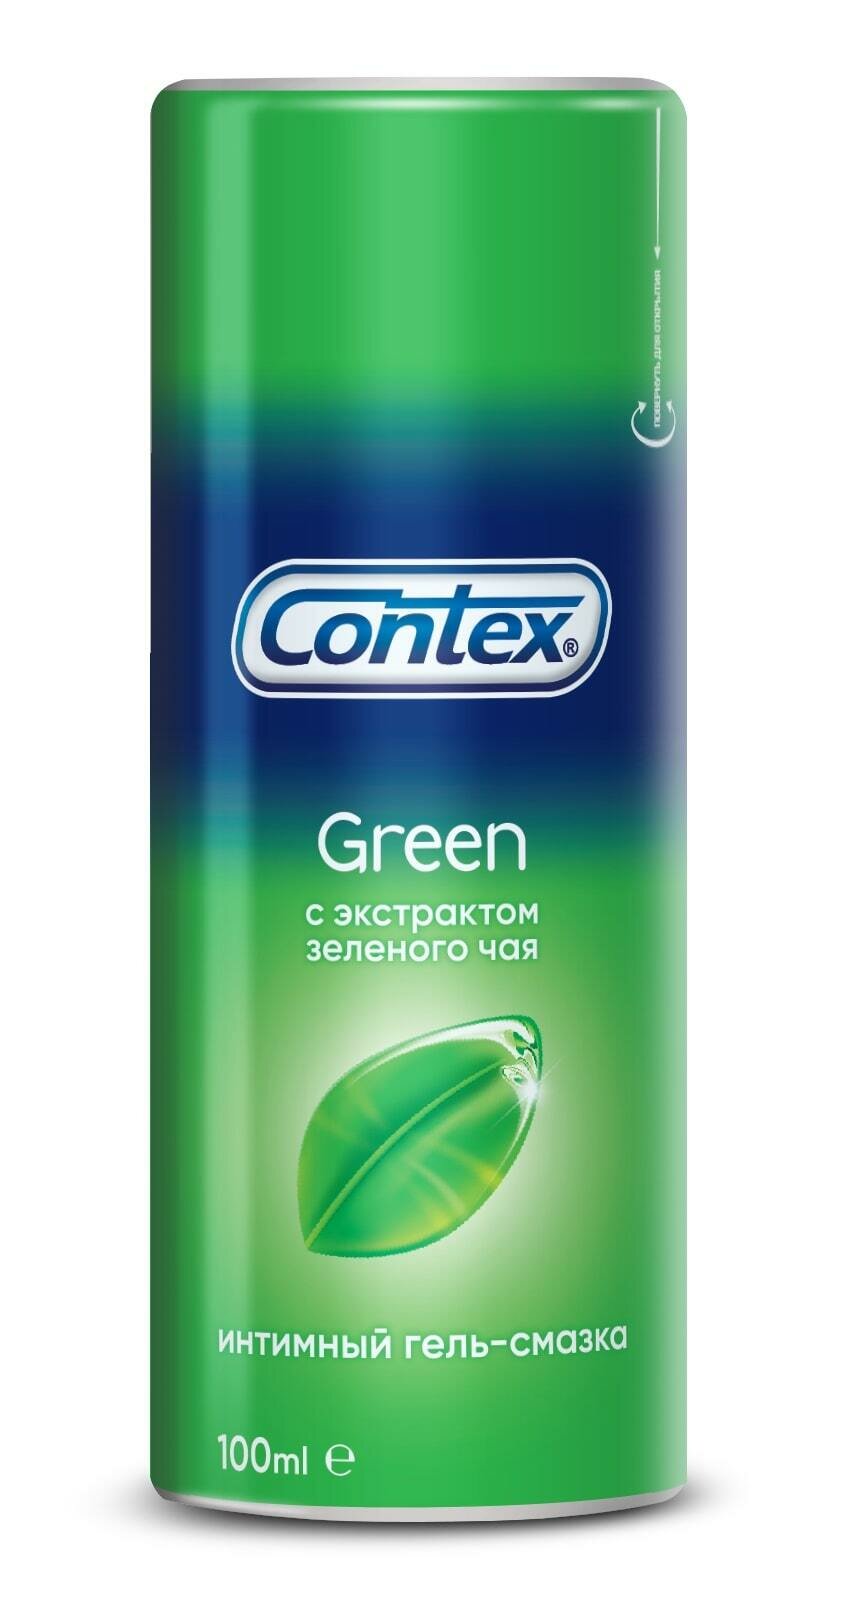 Contex гель-смазка green 100мл антибактериальная